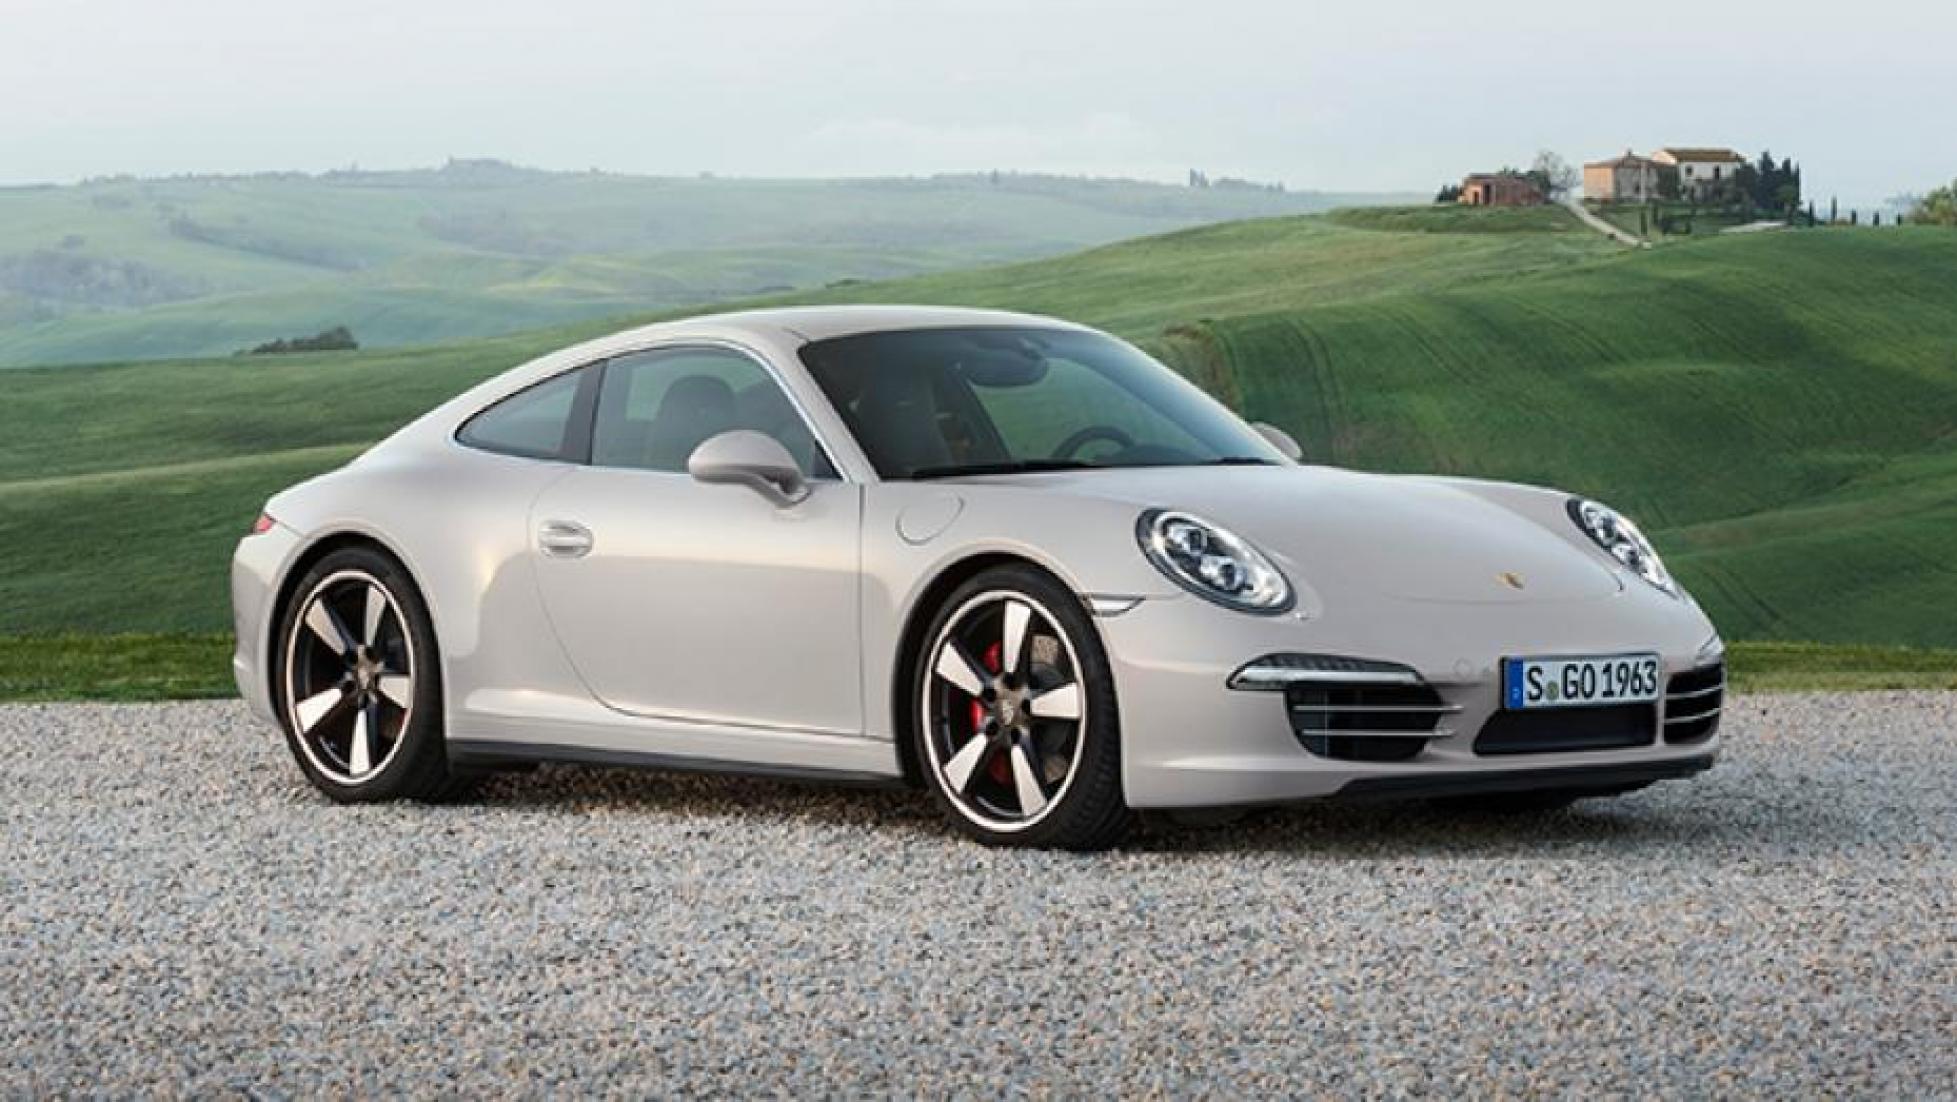 5. Porsche 911 50th anniversary